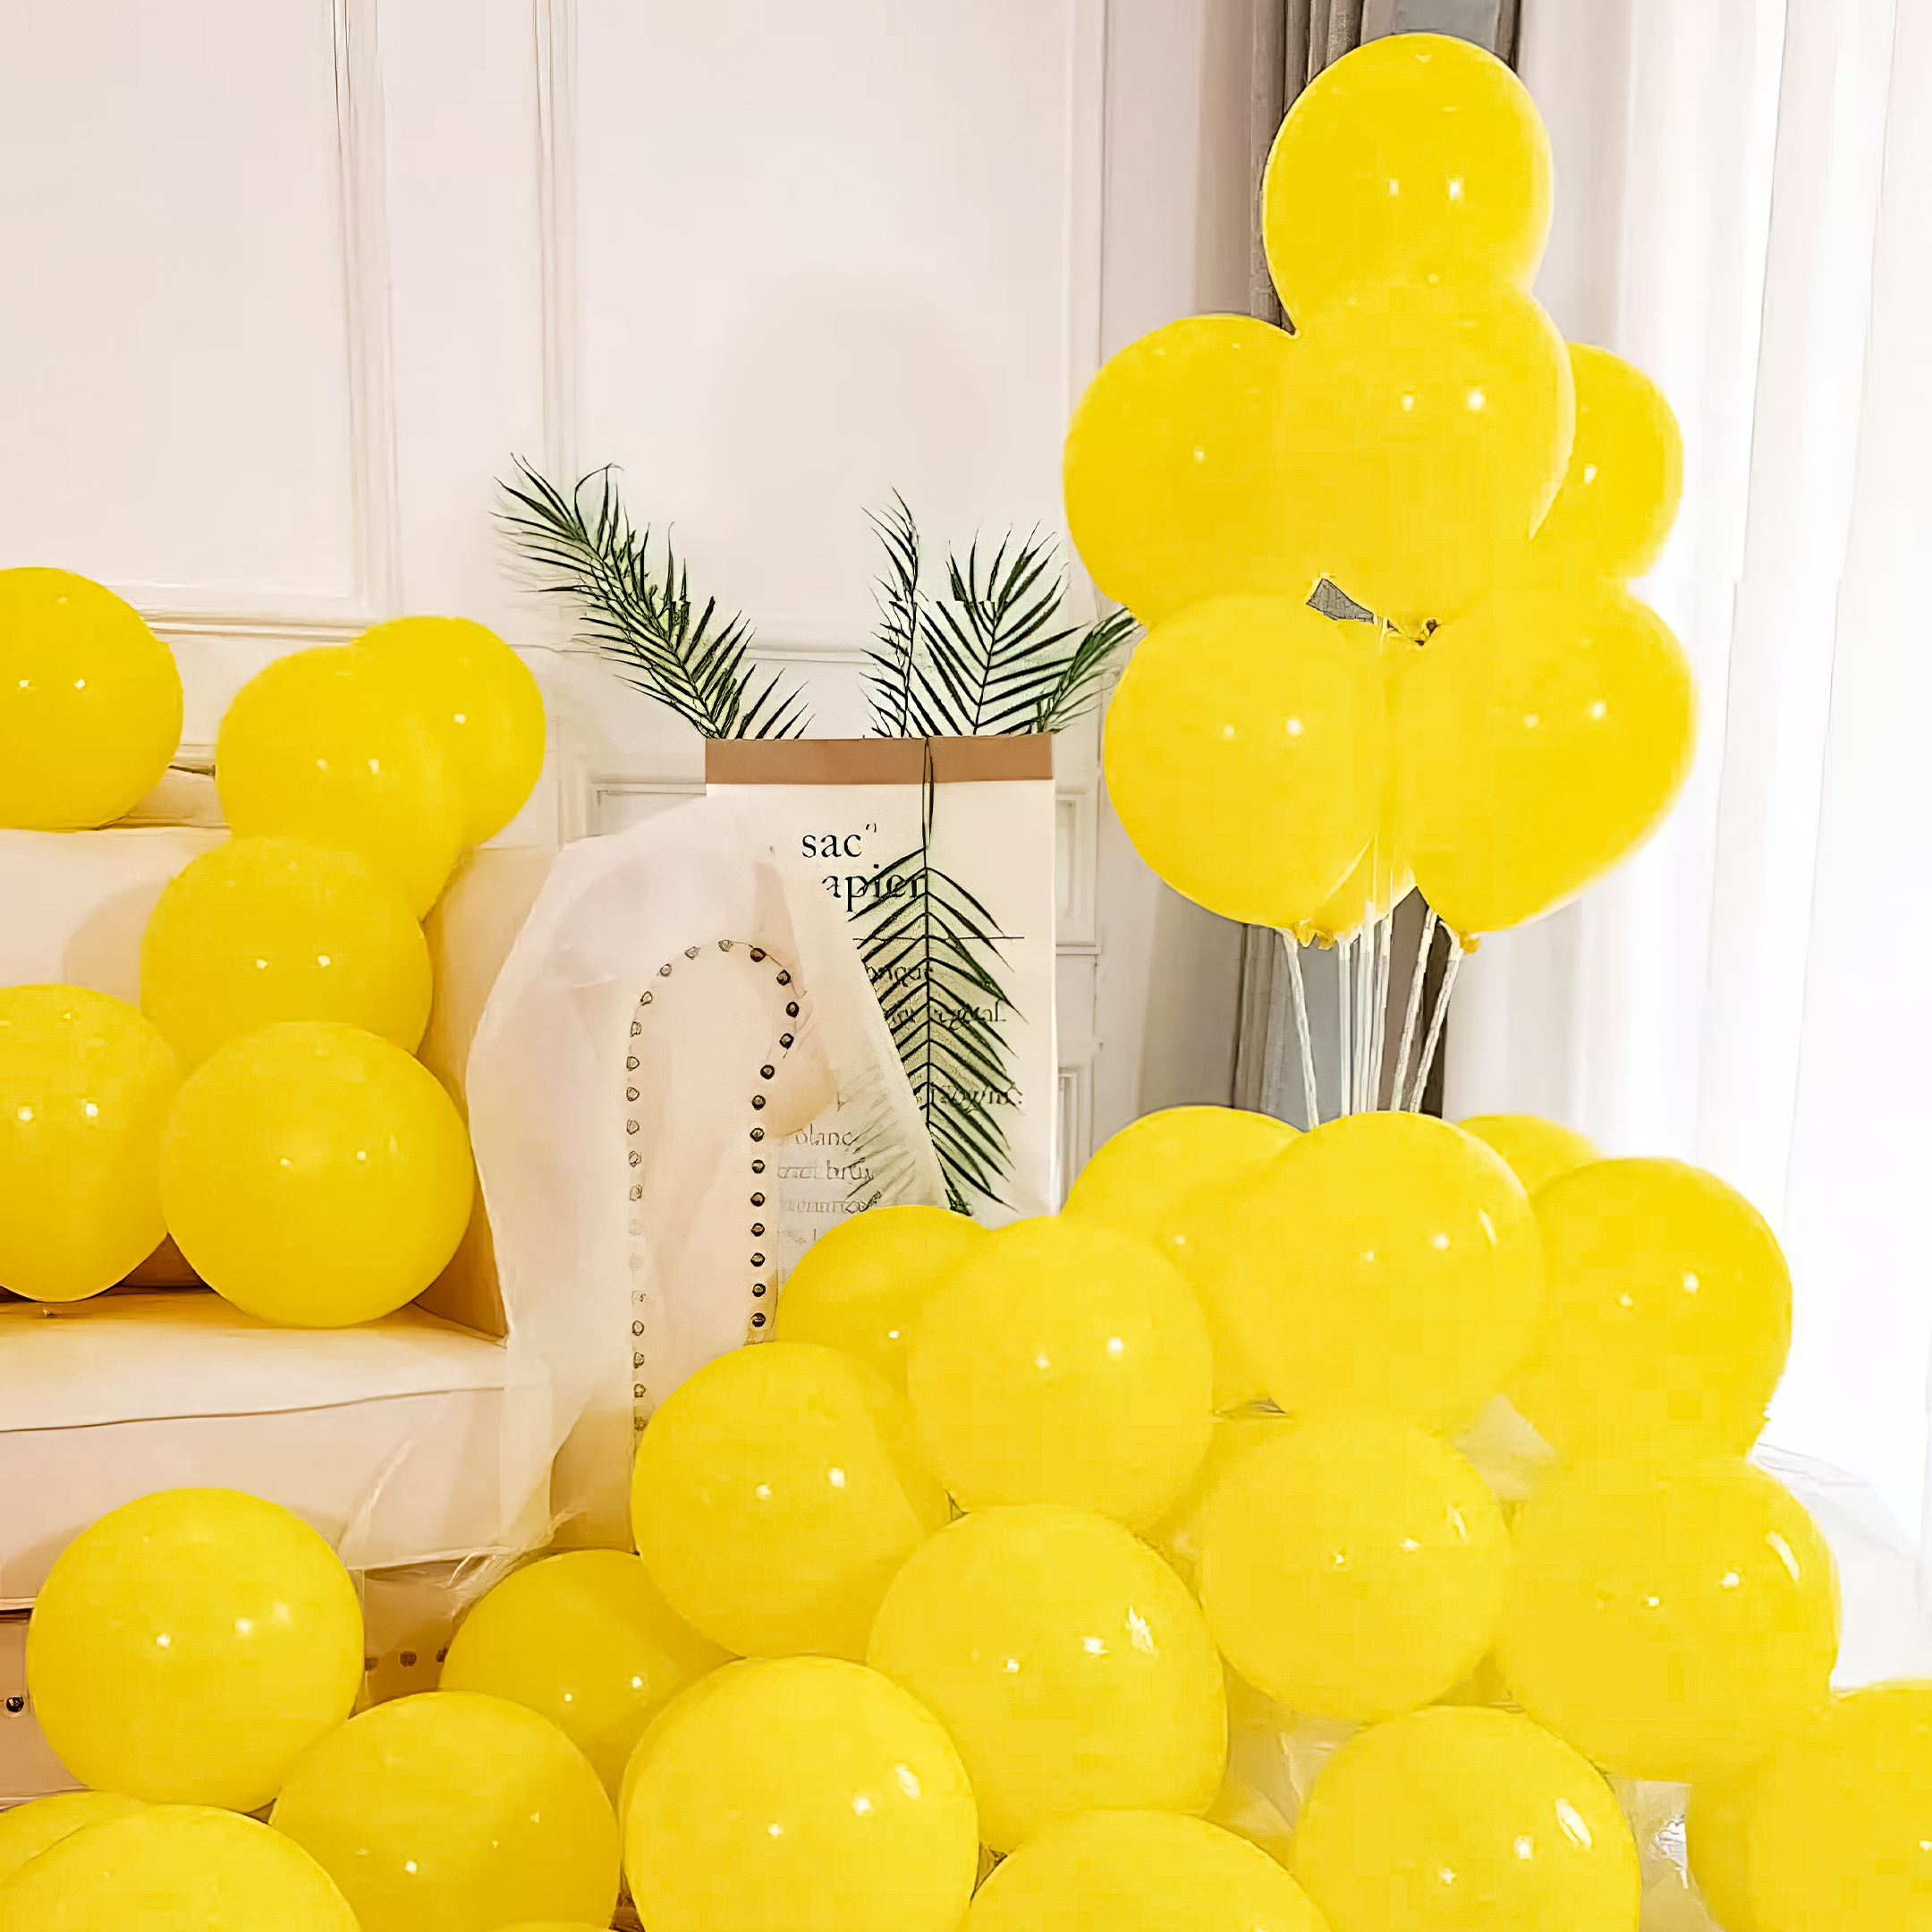 Yellow Metallic balloons for Party decoration-100pcs